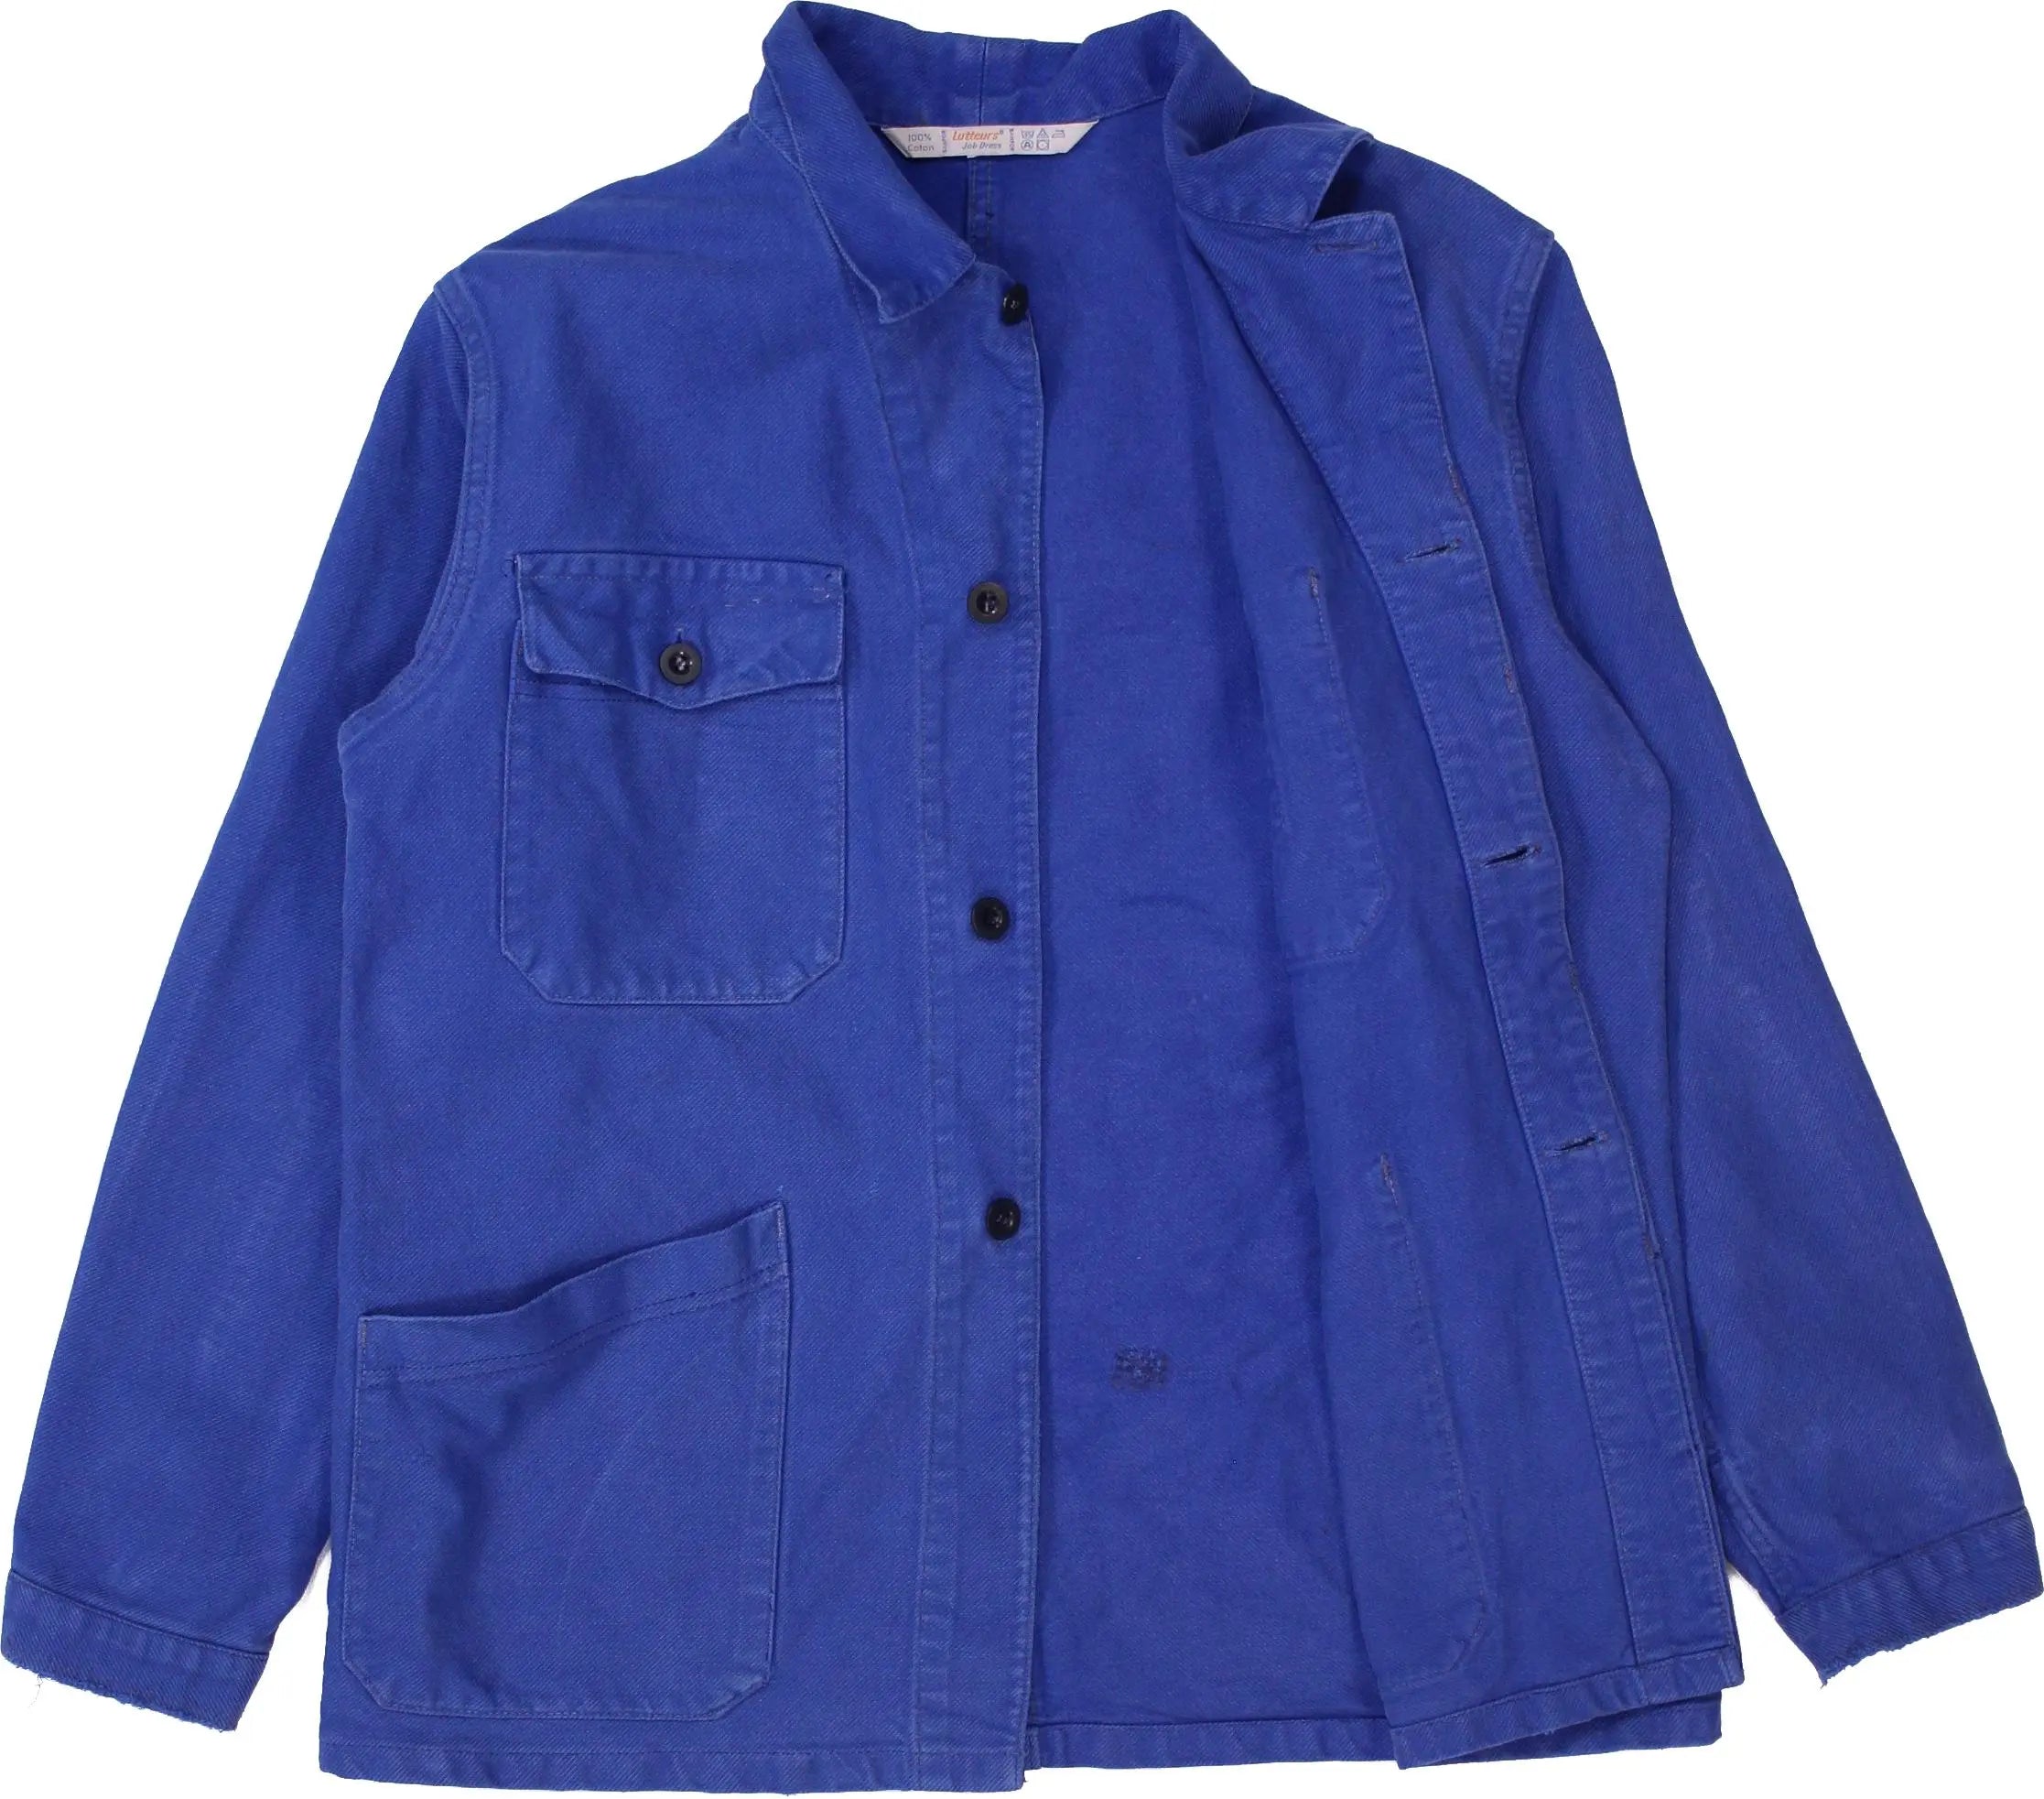 Lutteurs - Vintage Workwear Jacket- ThriftTale.com - Vintage and second handclothing